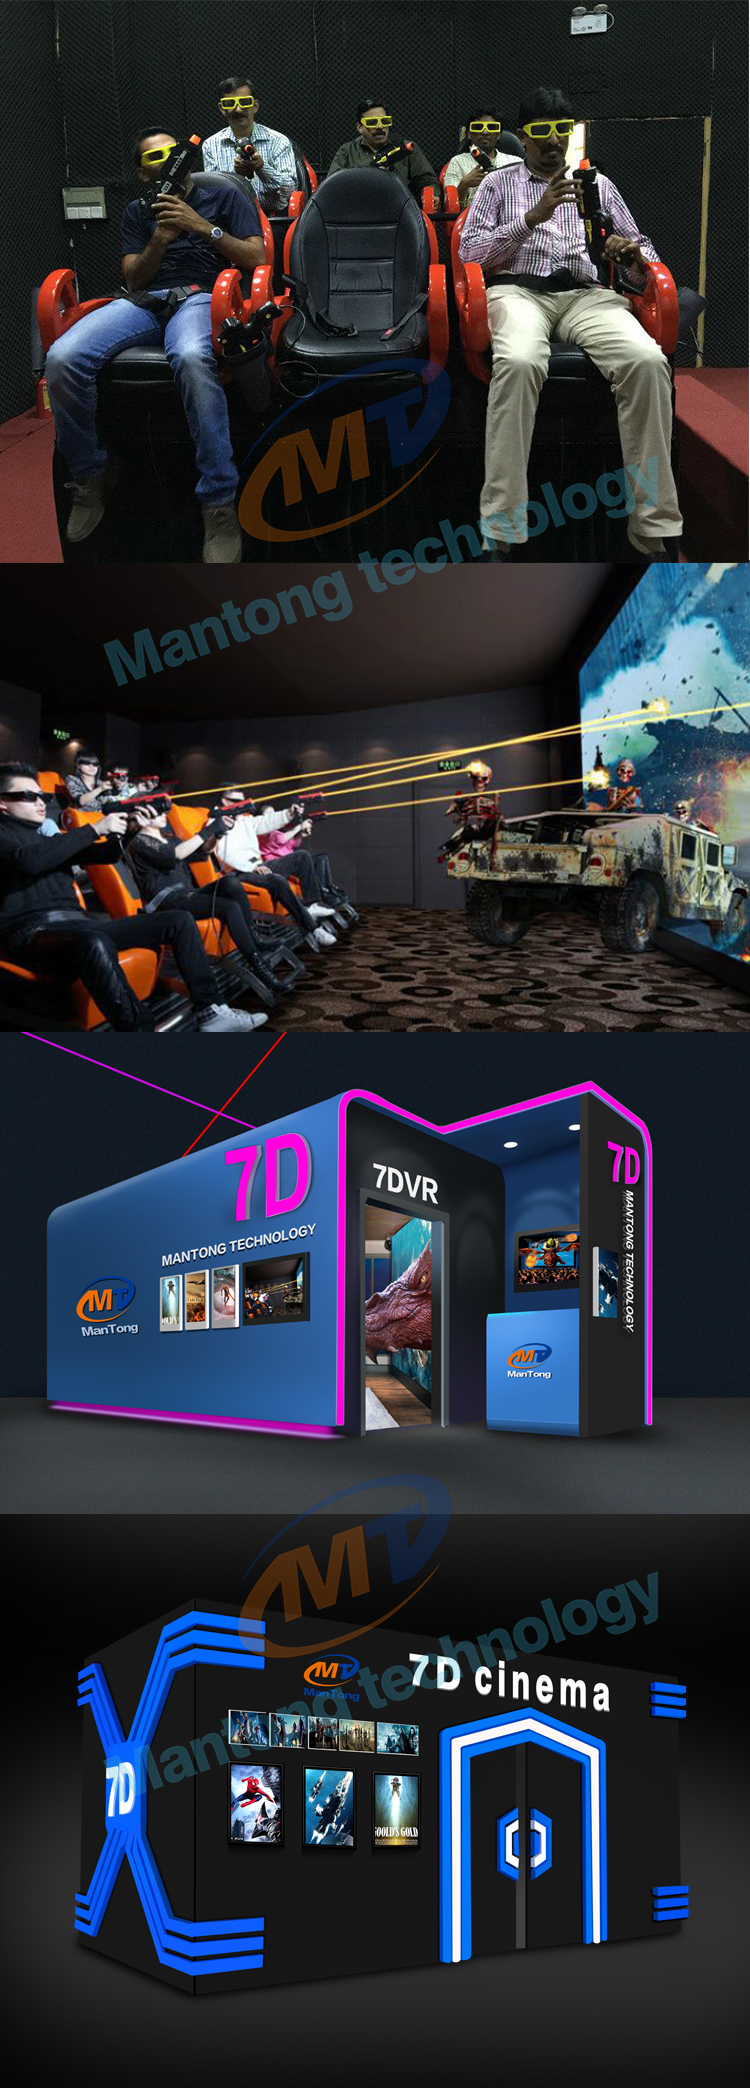 Fashionable Hydraulic / Electric System 7D Simulator Cinema Equipment